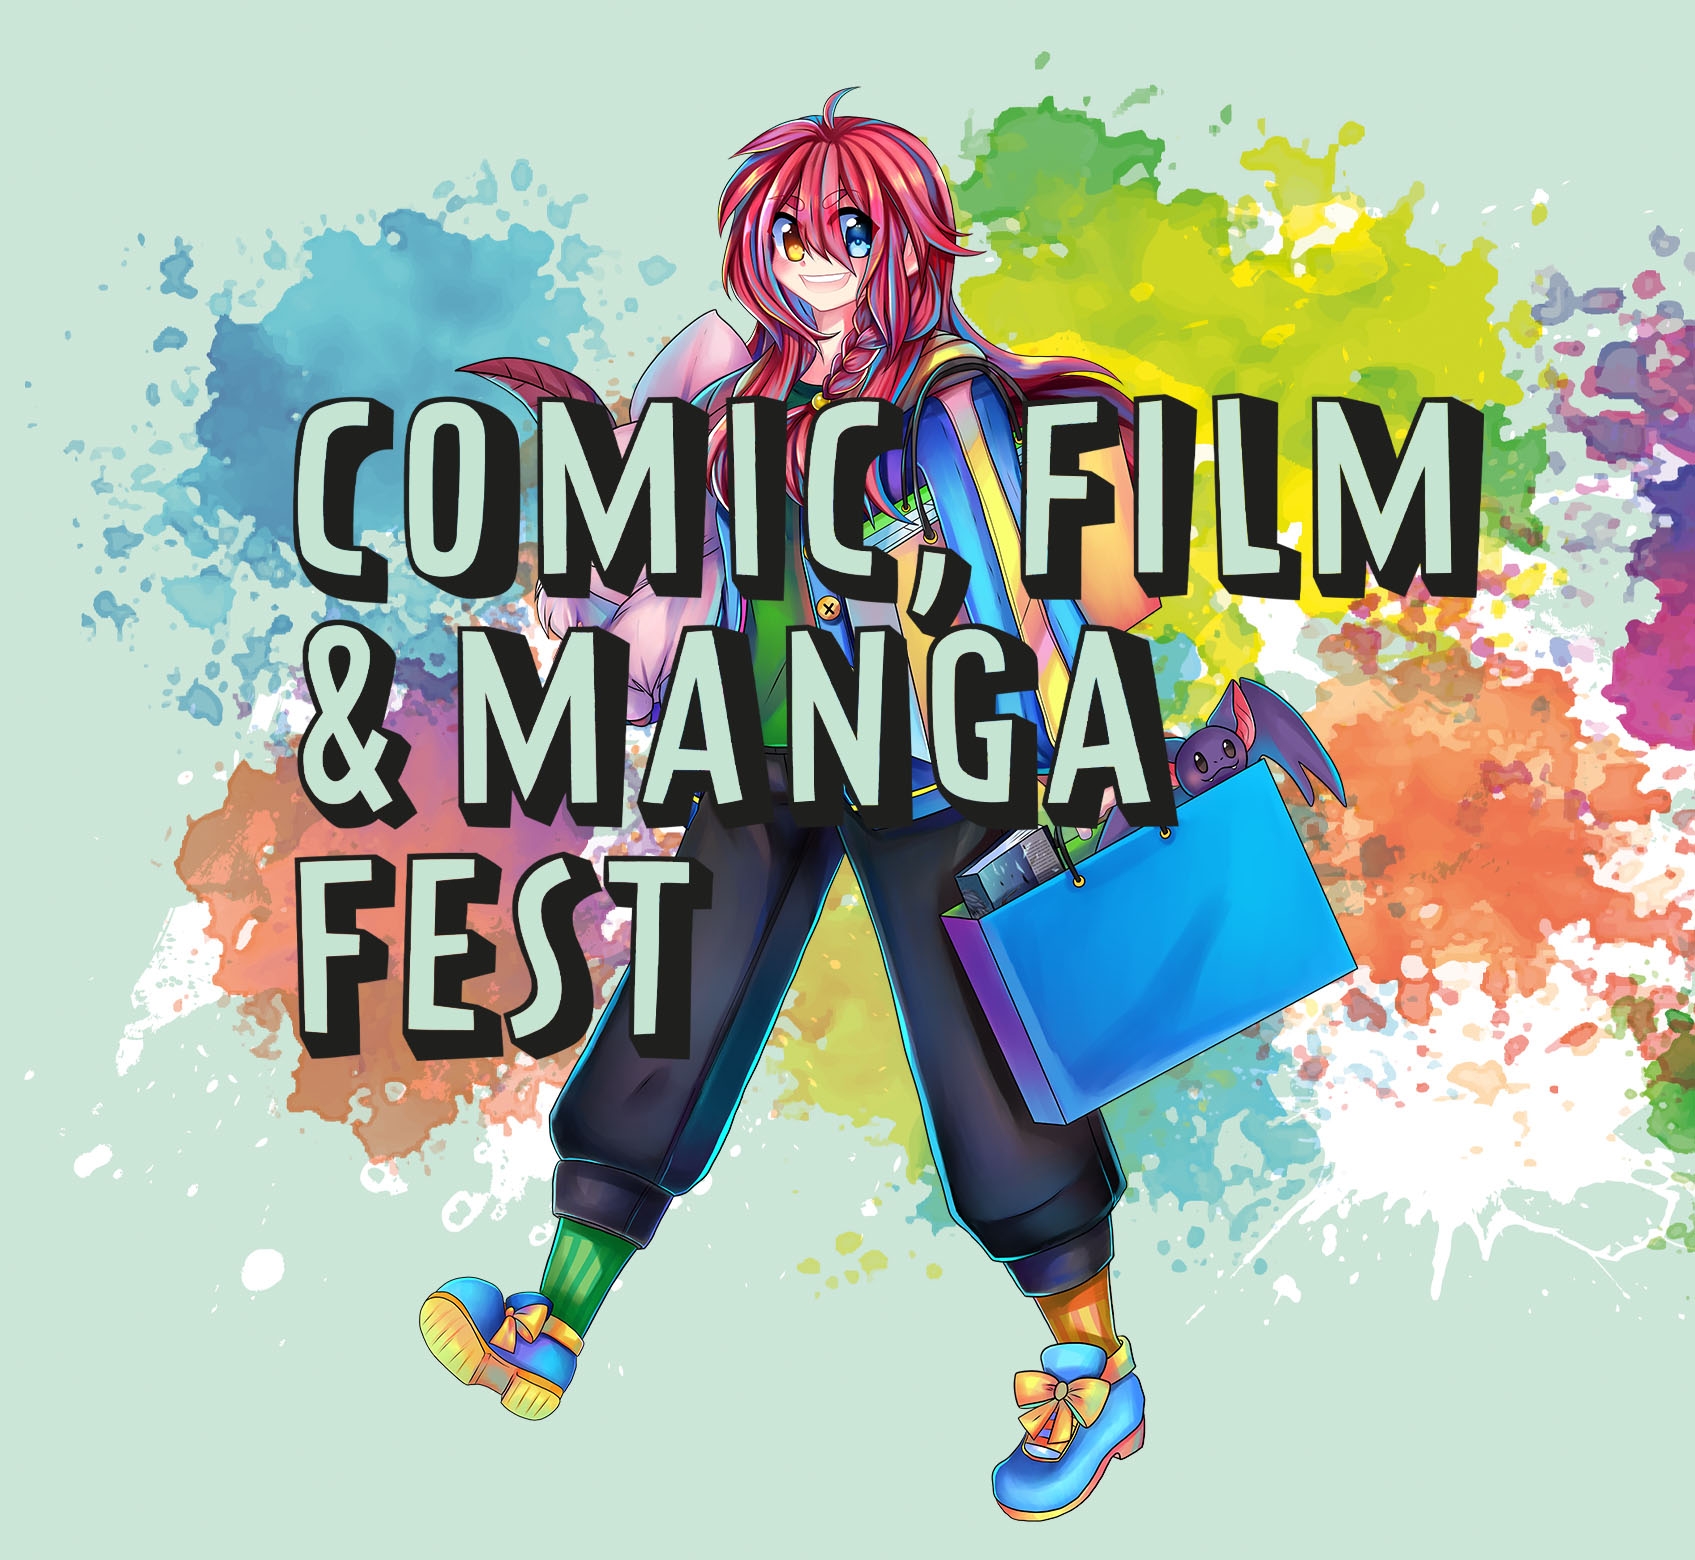 Onze sfeerimpressie van Comic Film & Manga Fest Rotterdam